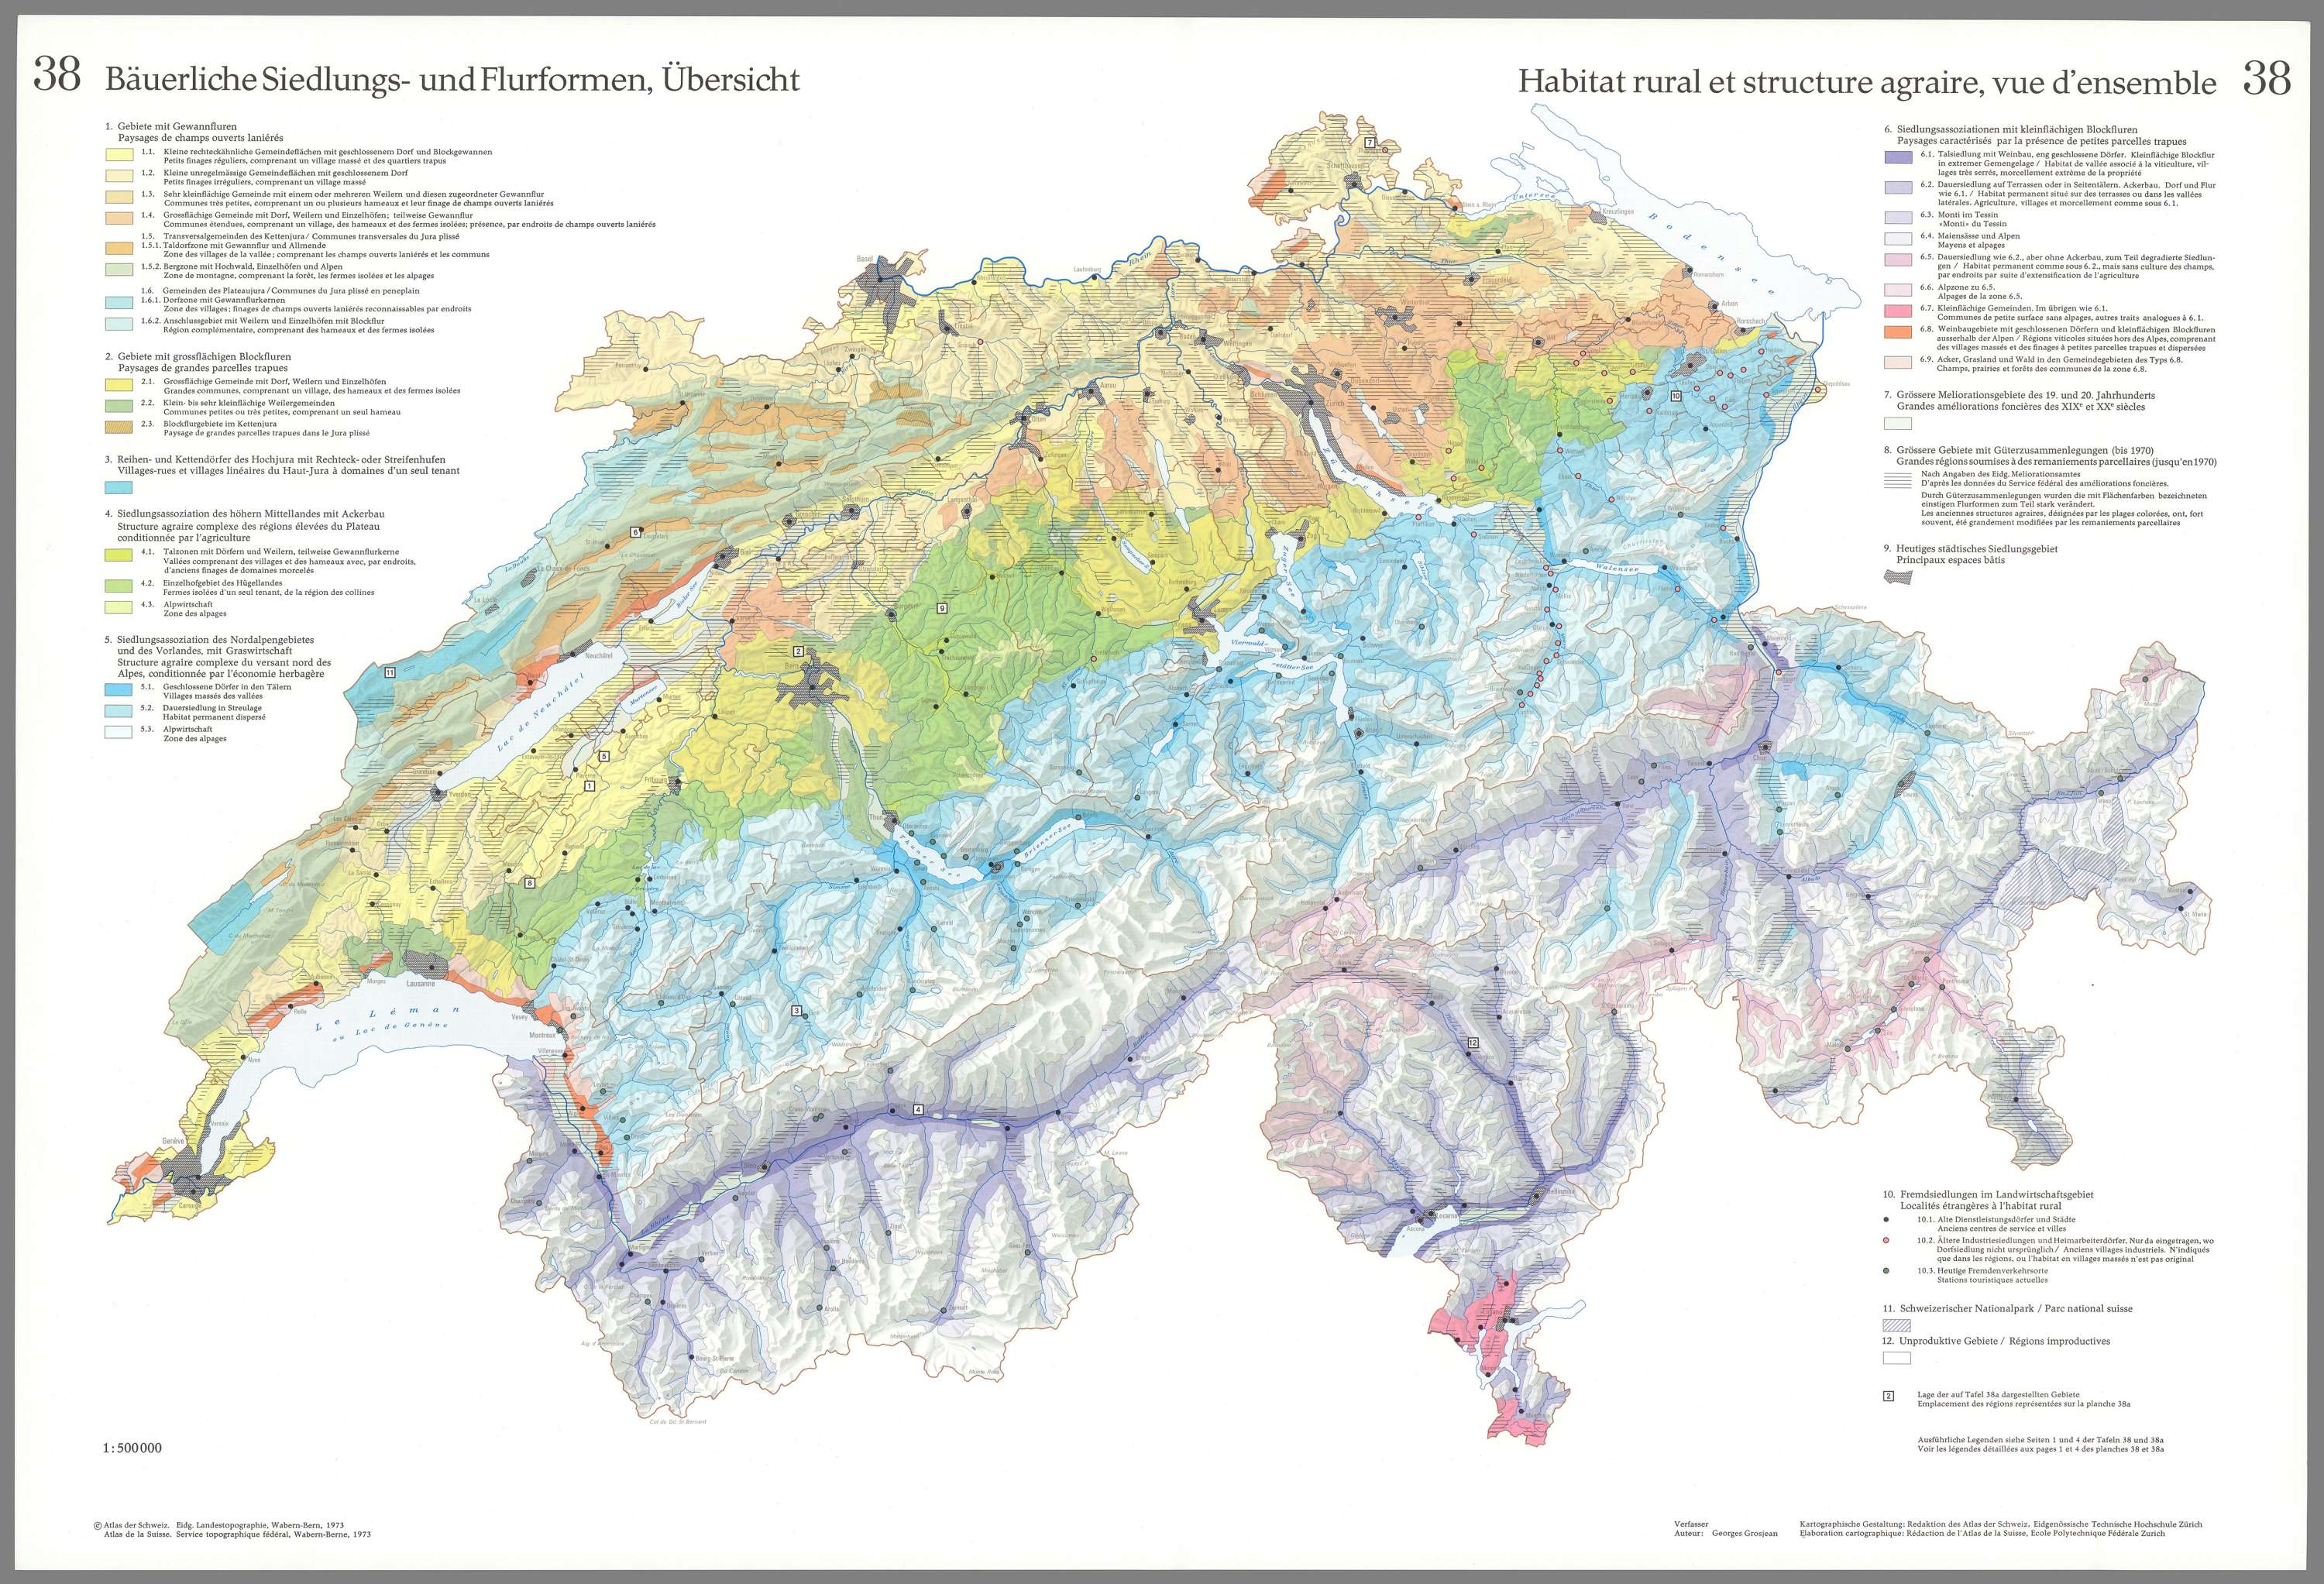 Atlas der Schweiz